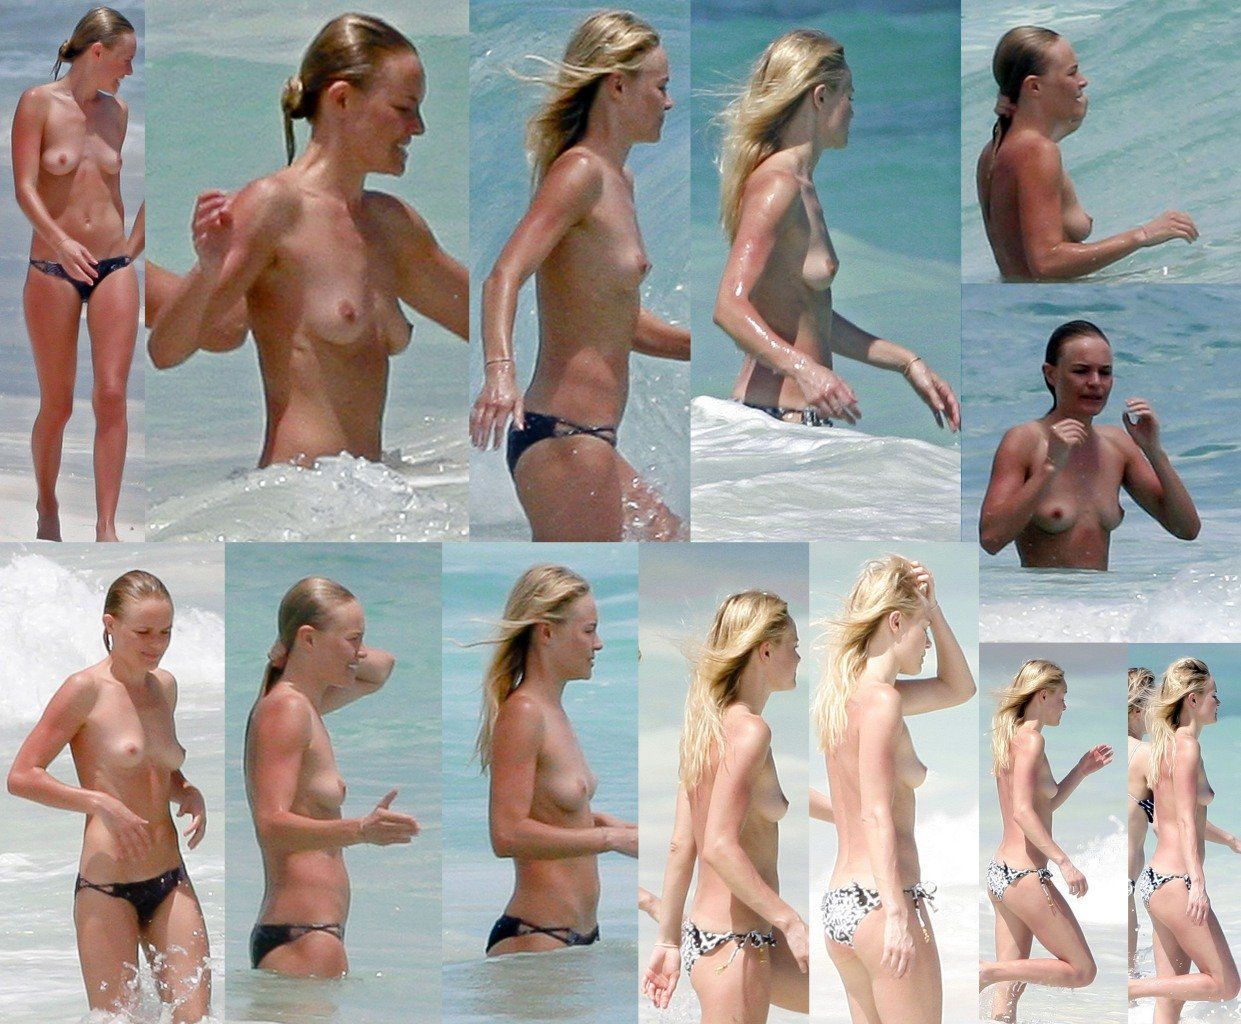 Bosworth nudes kate leaked Kate Bosworth